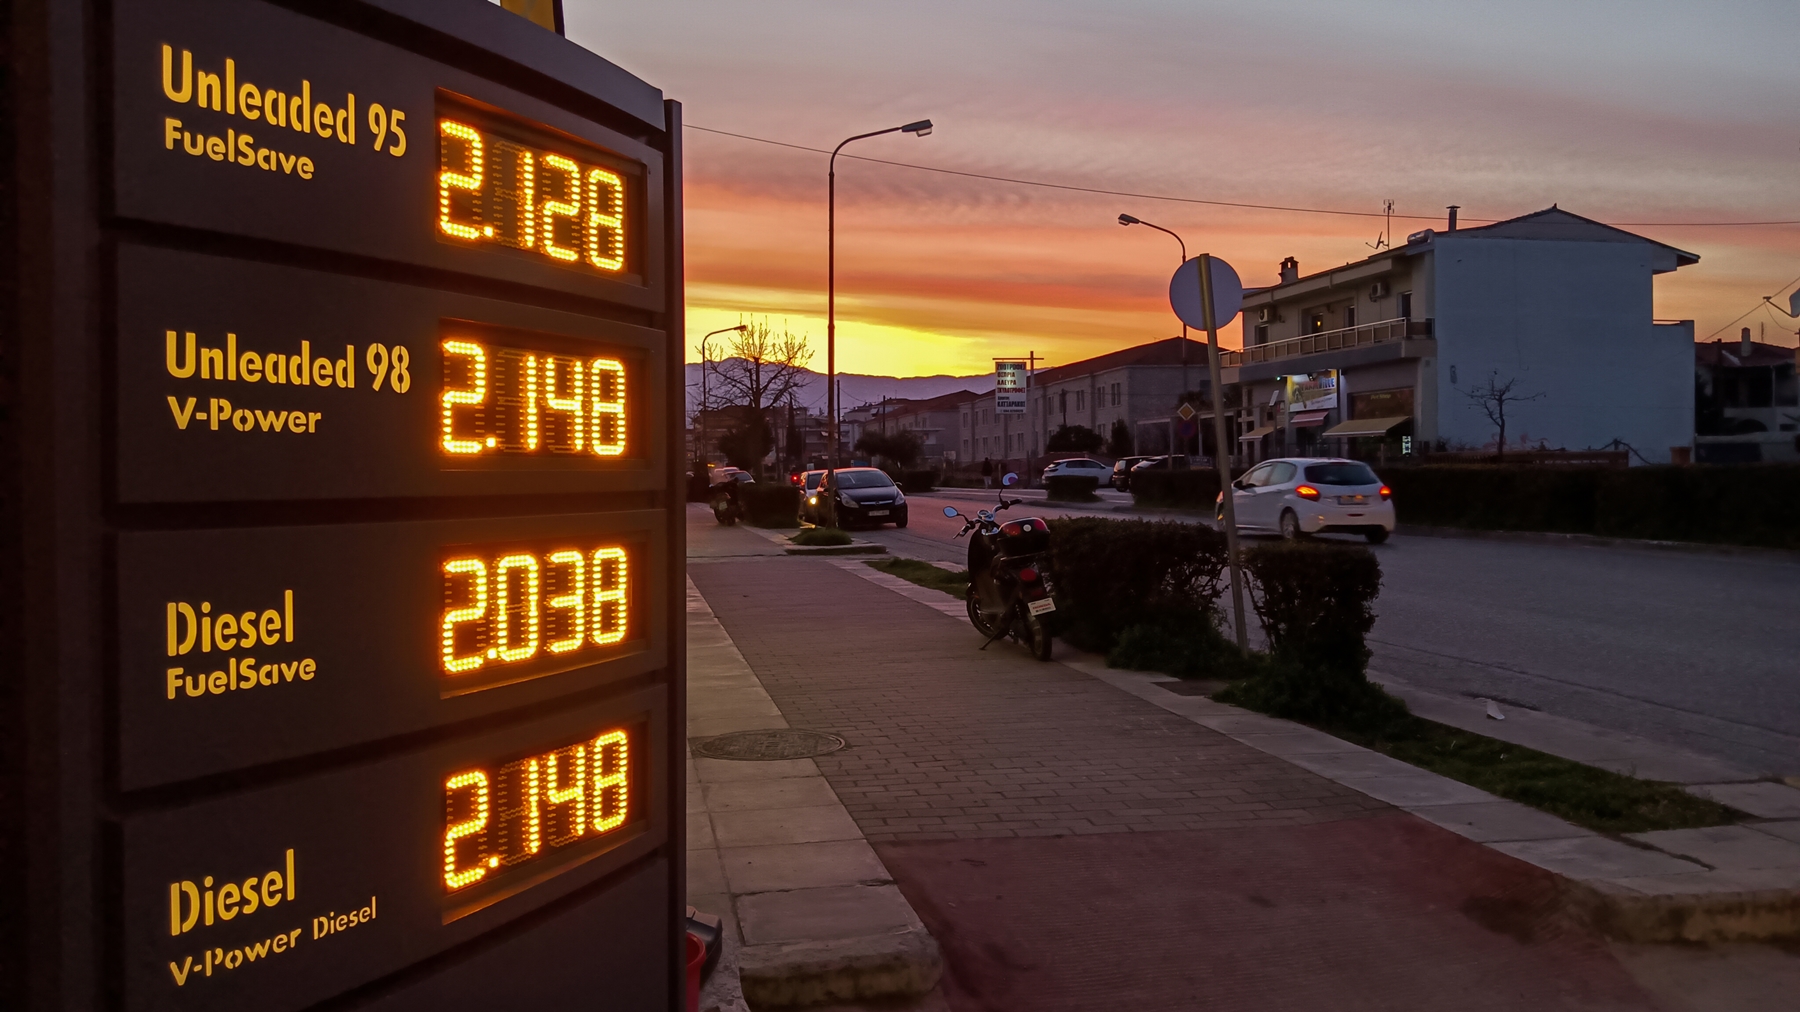 Fuel pass 2 αίτηση – gov.gr: Εν αναμονή για το άνοιγμα της πλατφόρμας